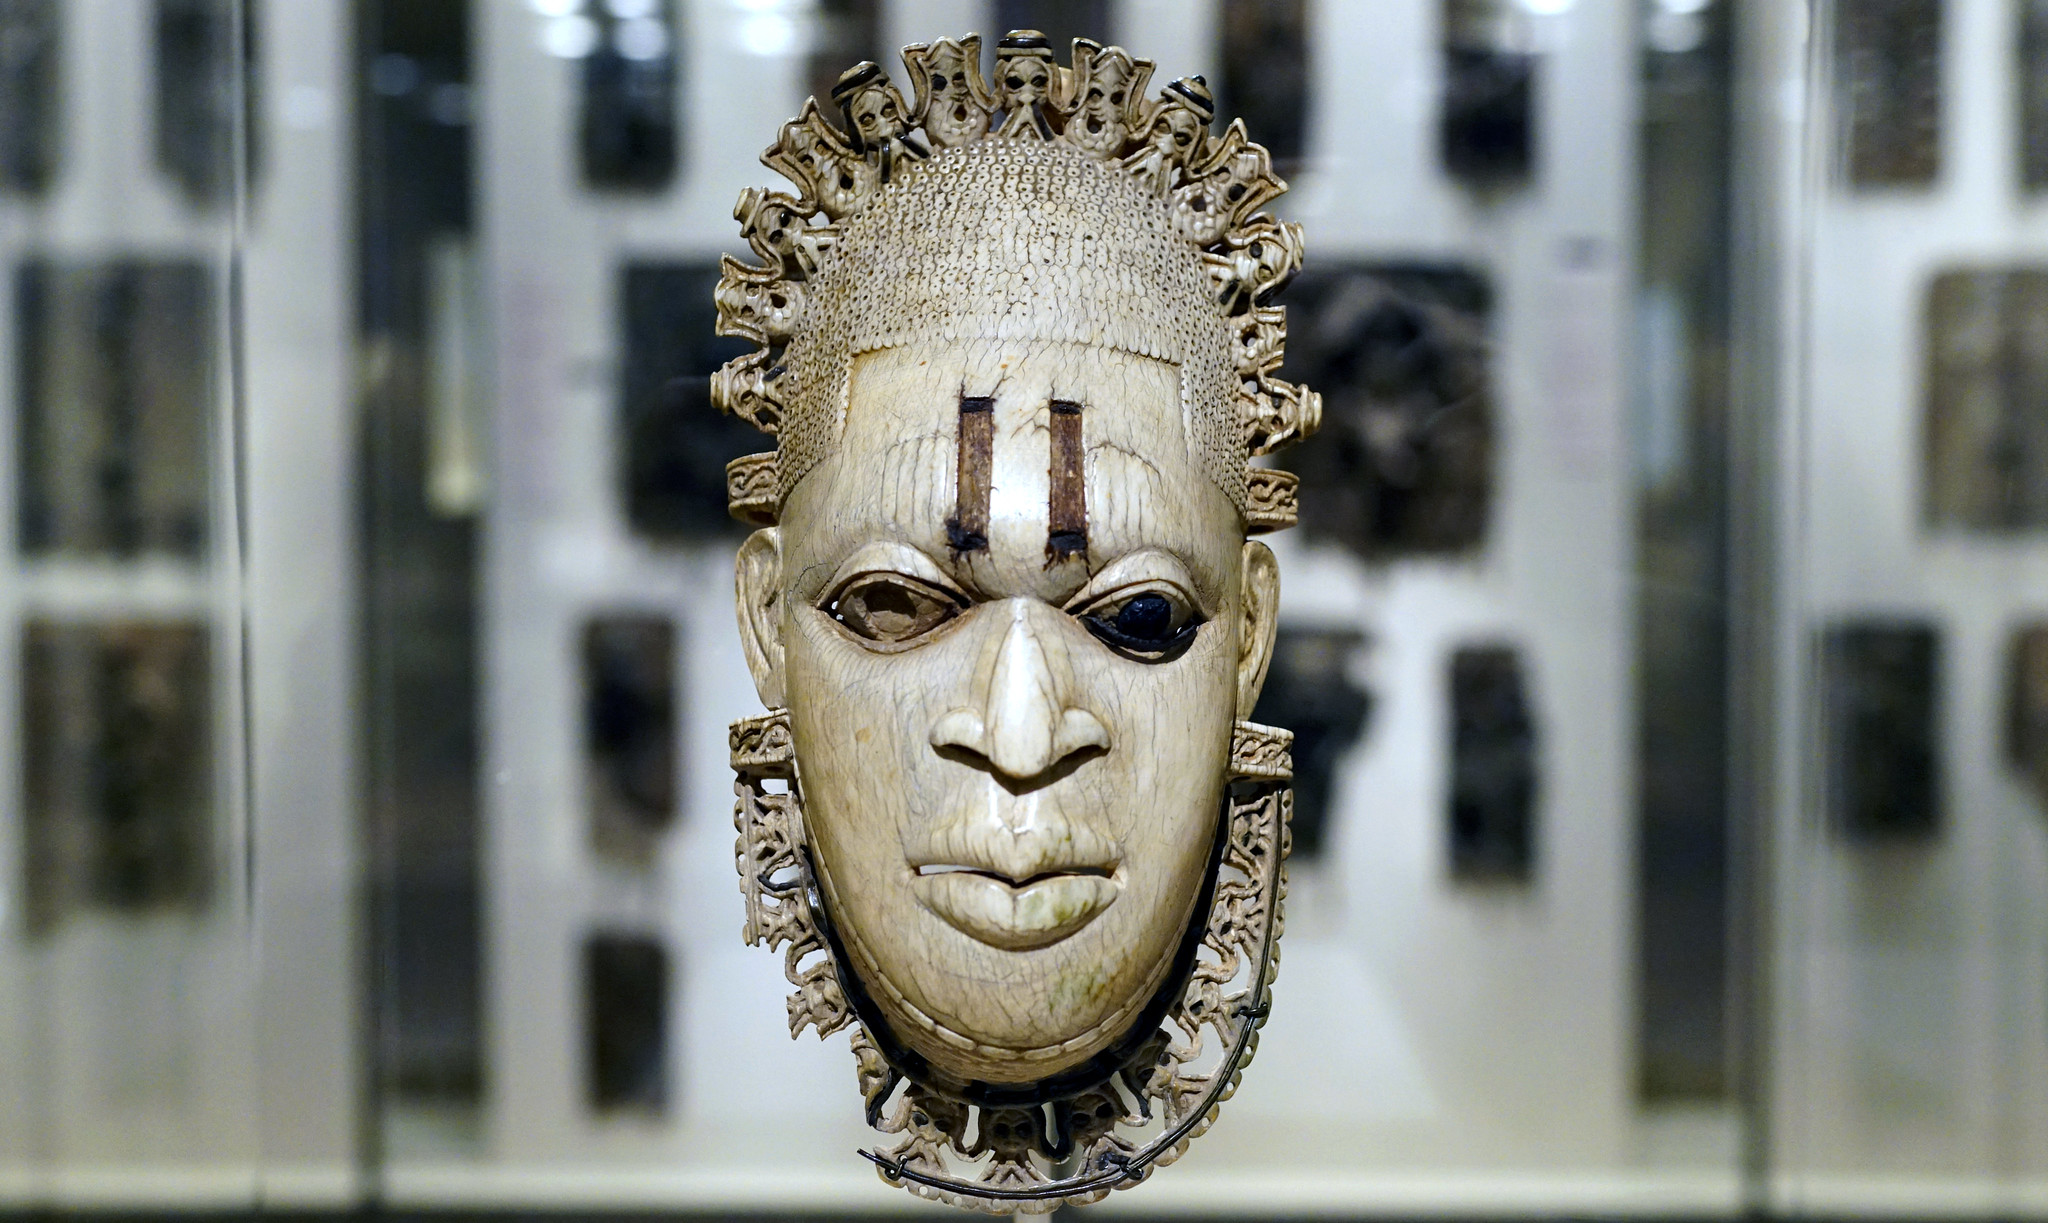 Queen Mother Pendant Mask (Iyoba), 16th century (Edo peoples, Court of Benin, Nigeria), ivory, iron, copper, 23.8 x 12.7 x 8.3 cm (The Metropolitan Museum of Art, New York; photo: Steven Zucker, CC BY-NC-SA 2.0)